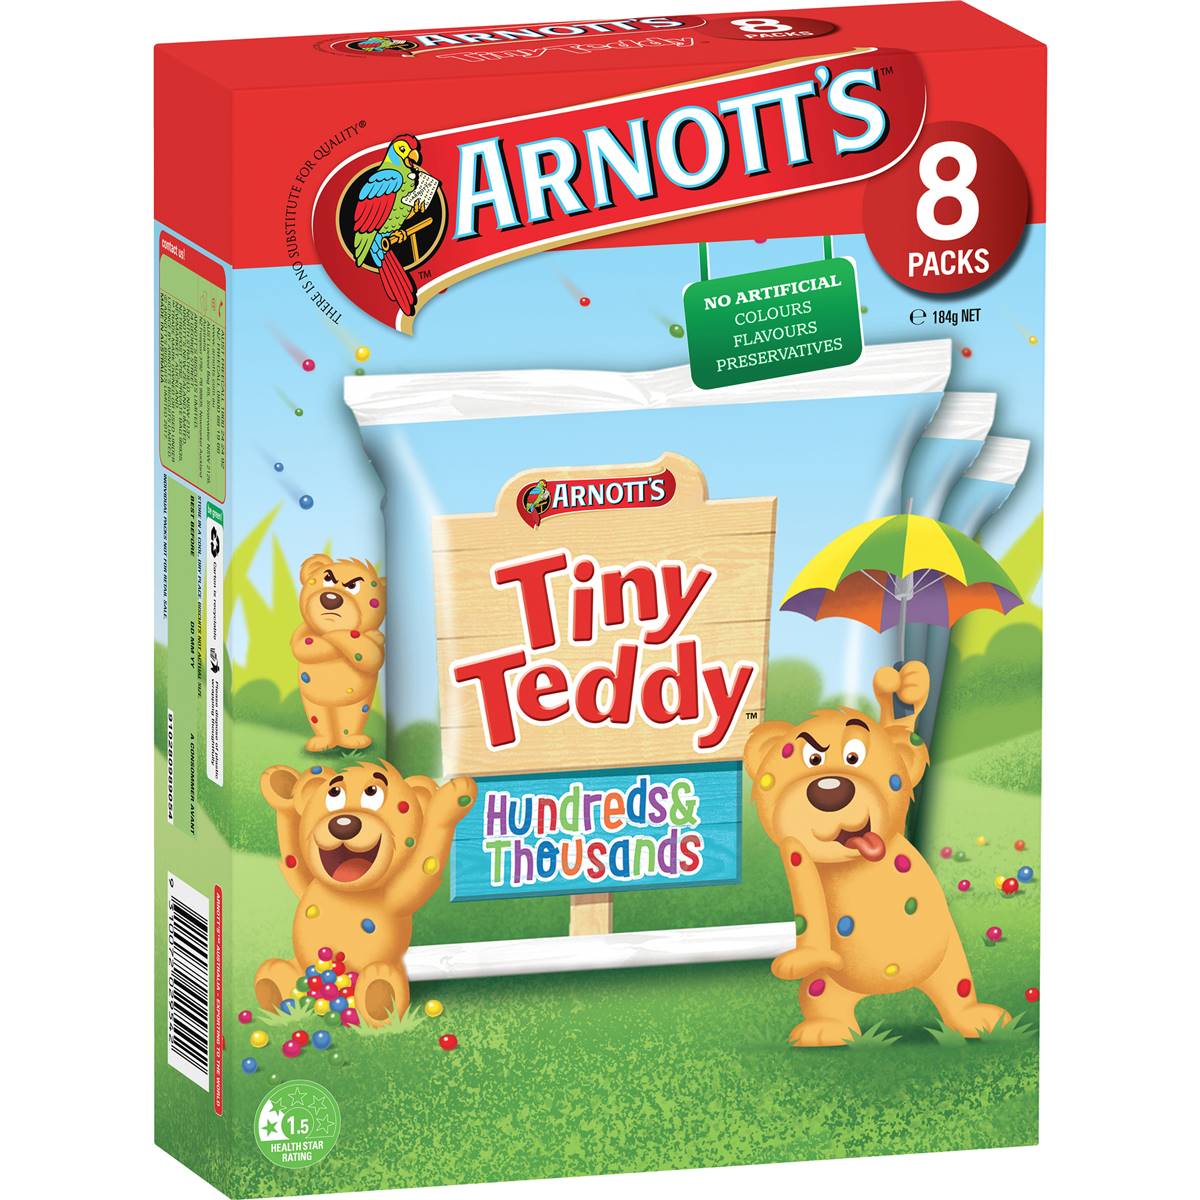 Arnott's Tiny Teddy Hundreds & Thousands Biscuits 8x23g